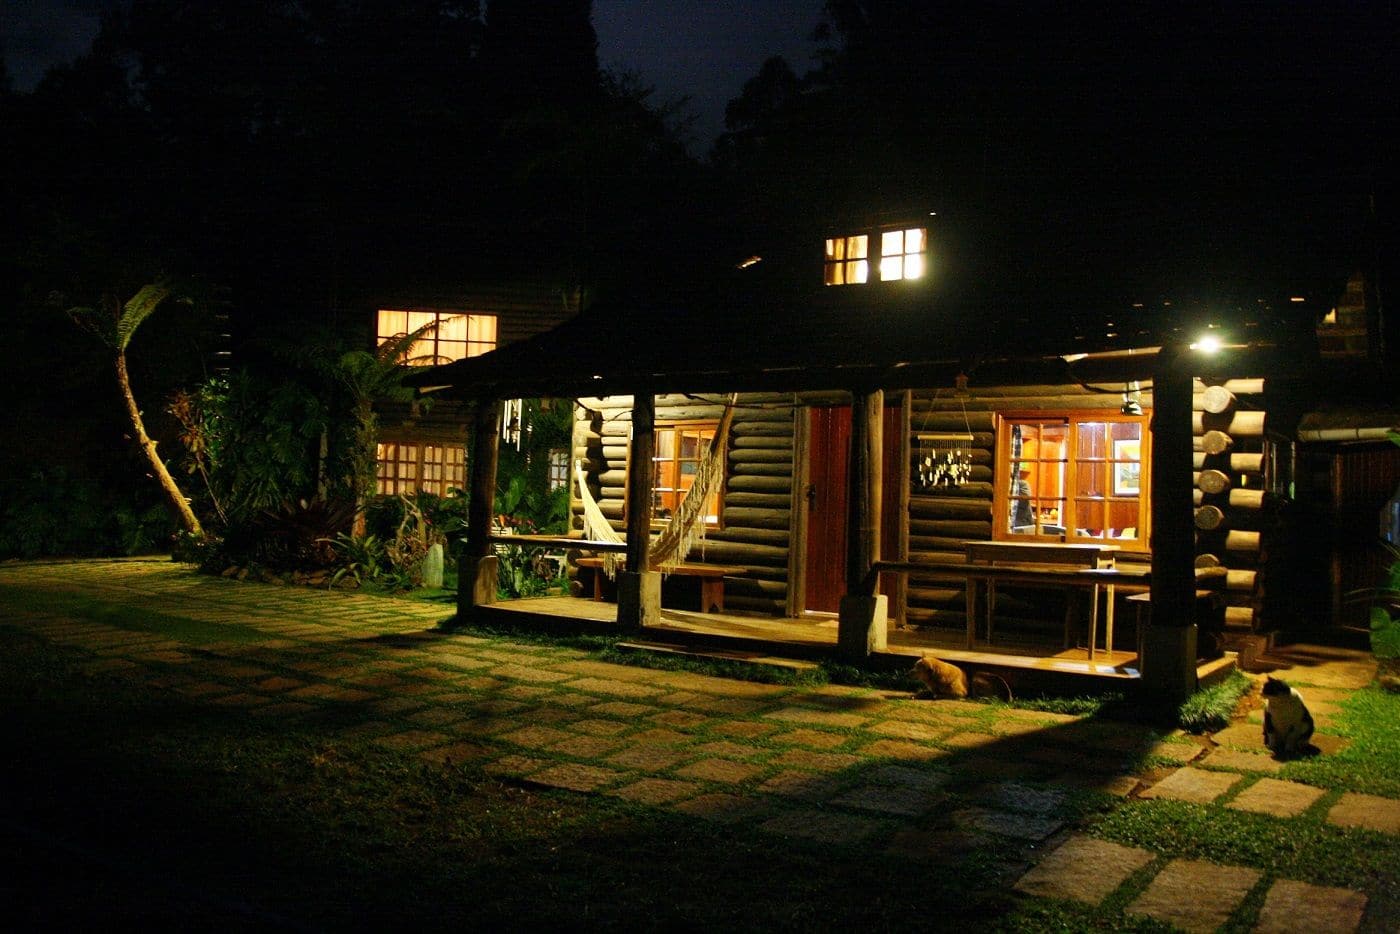 Itororo Ecolodge by night